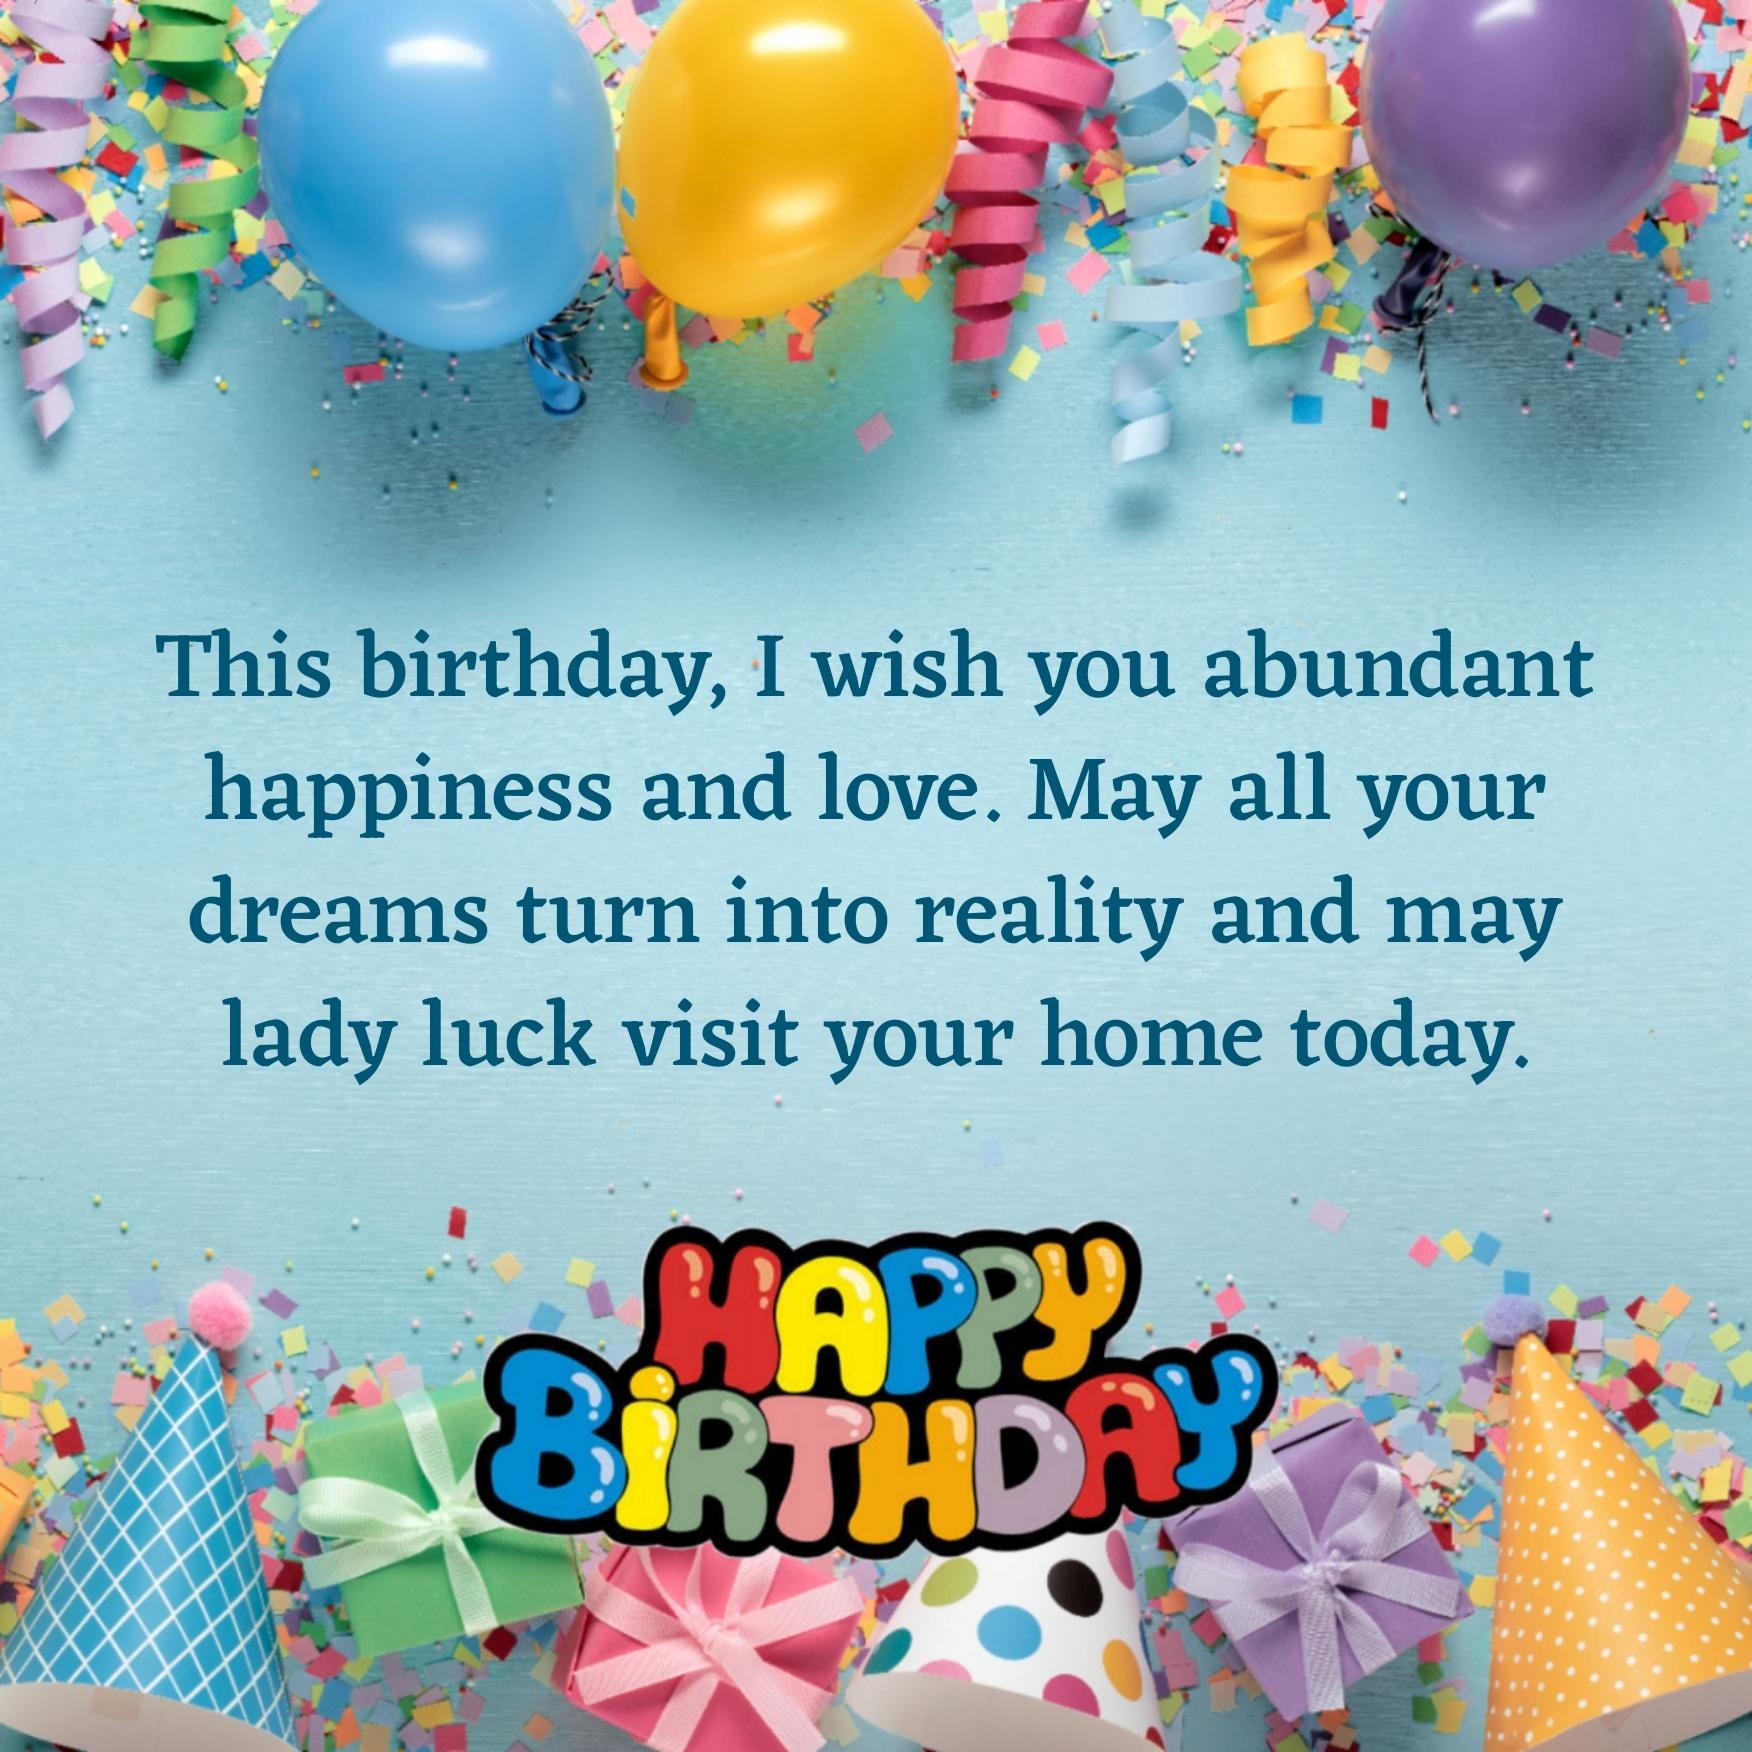 This birthday I wish you abundant happiness and love